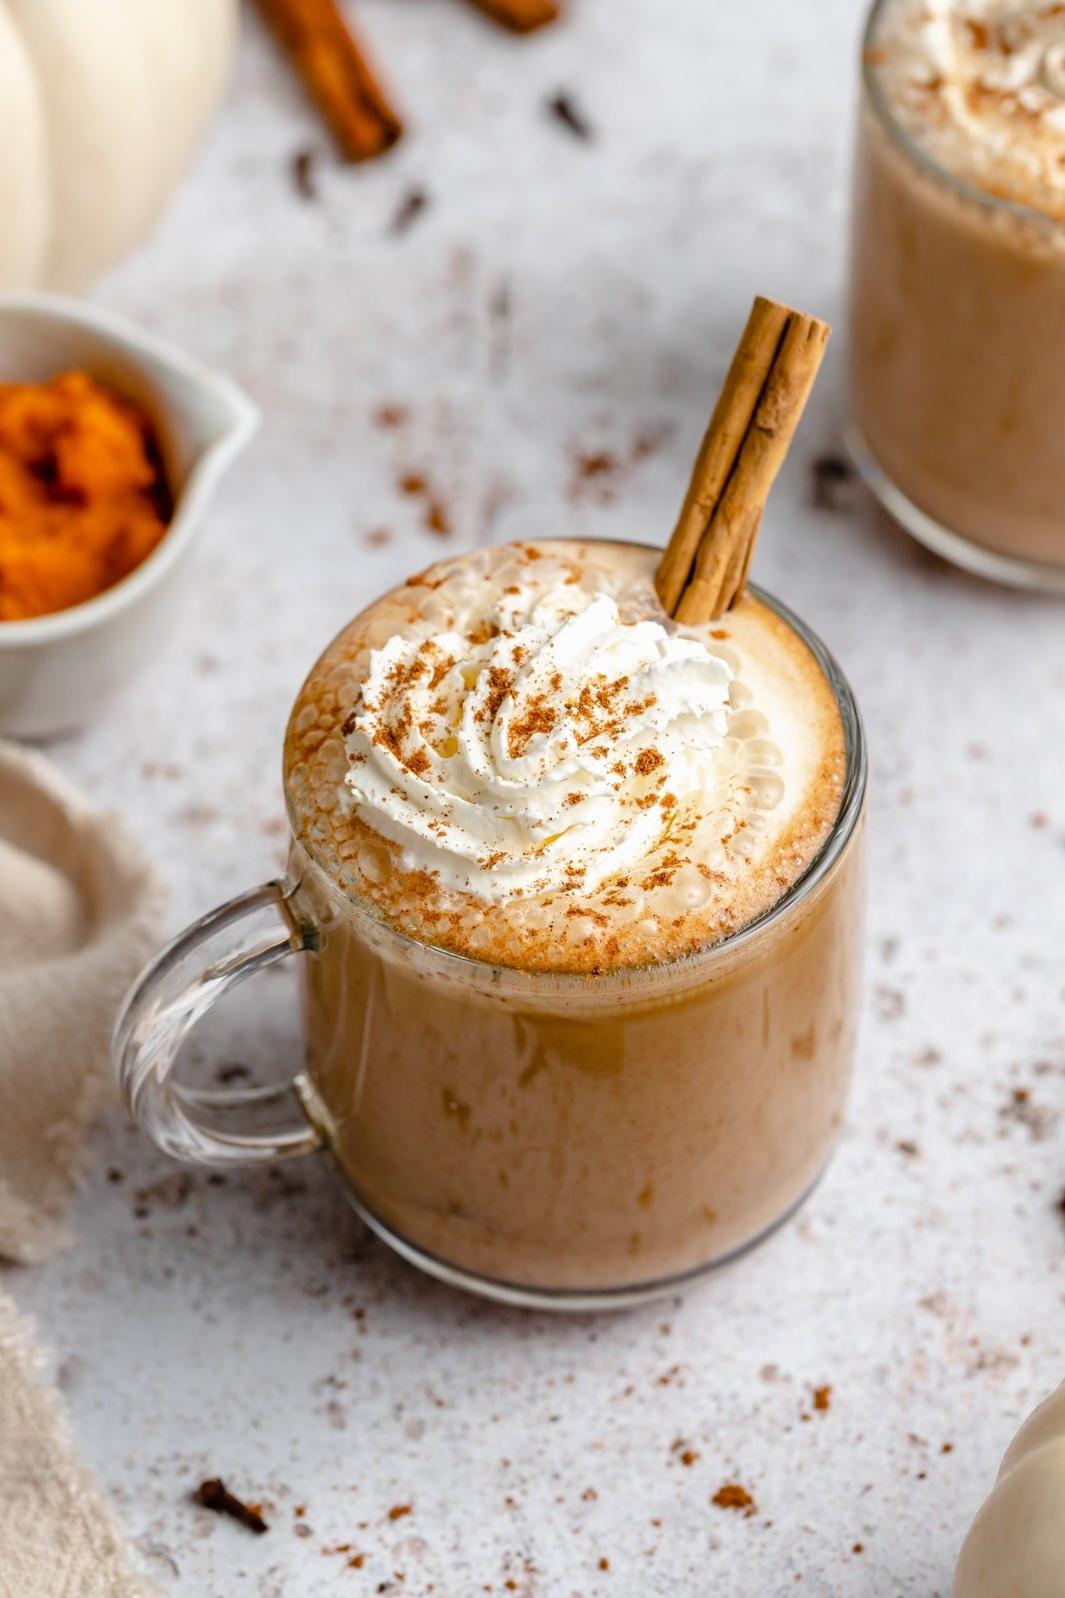  Everyone loves a good pumpkin spice latte, but have you tried the pumpkin pie latte?